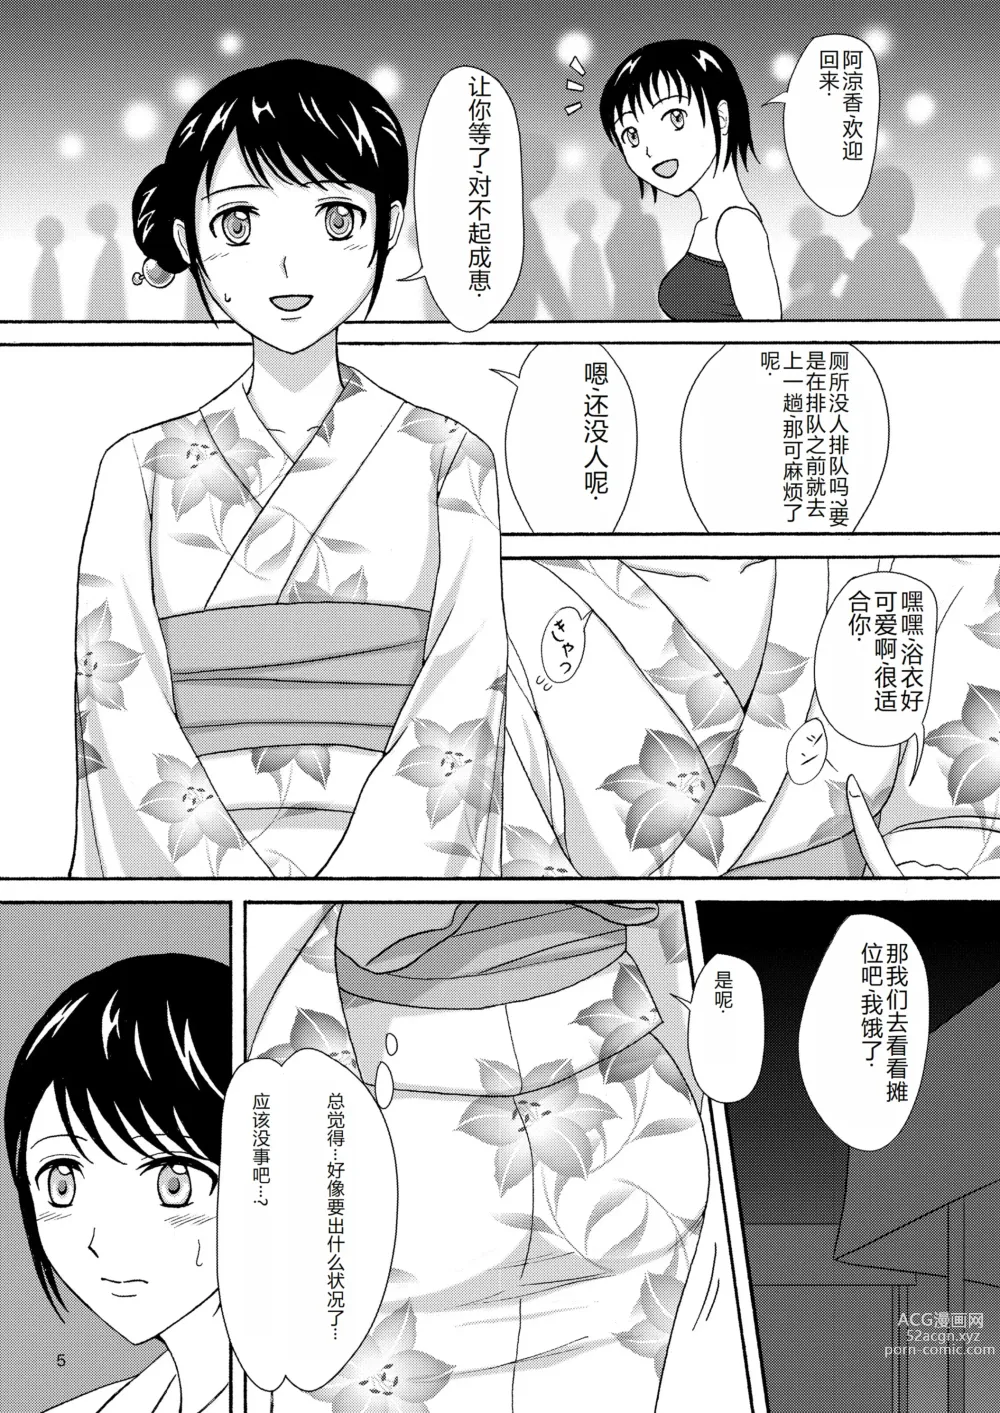 Page 4 of doujinshi Natsuben.